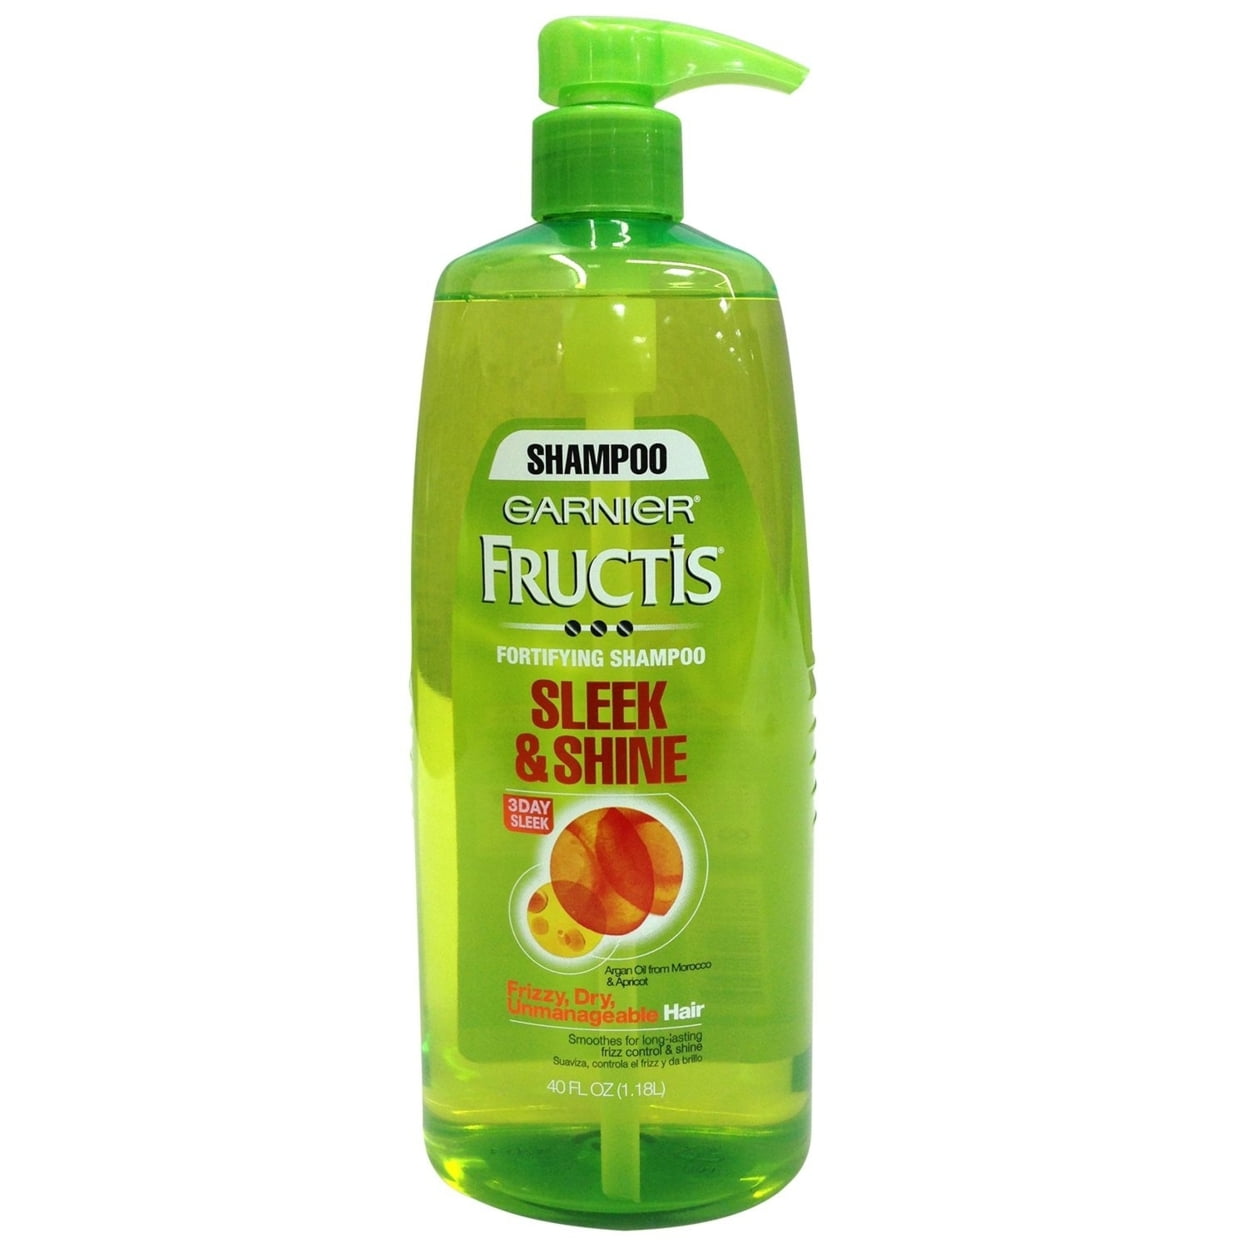 - - Fructis Garnier 40 Pump Shampoo Ounce